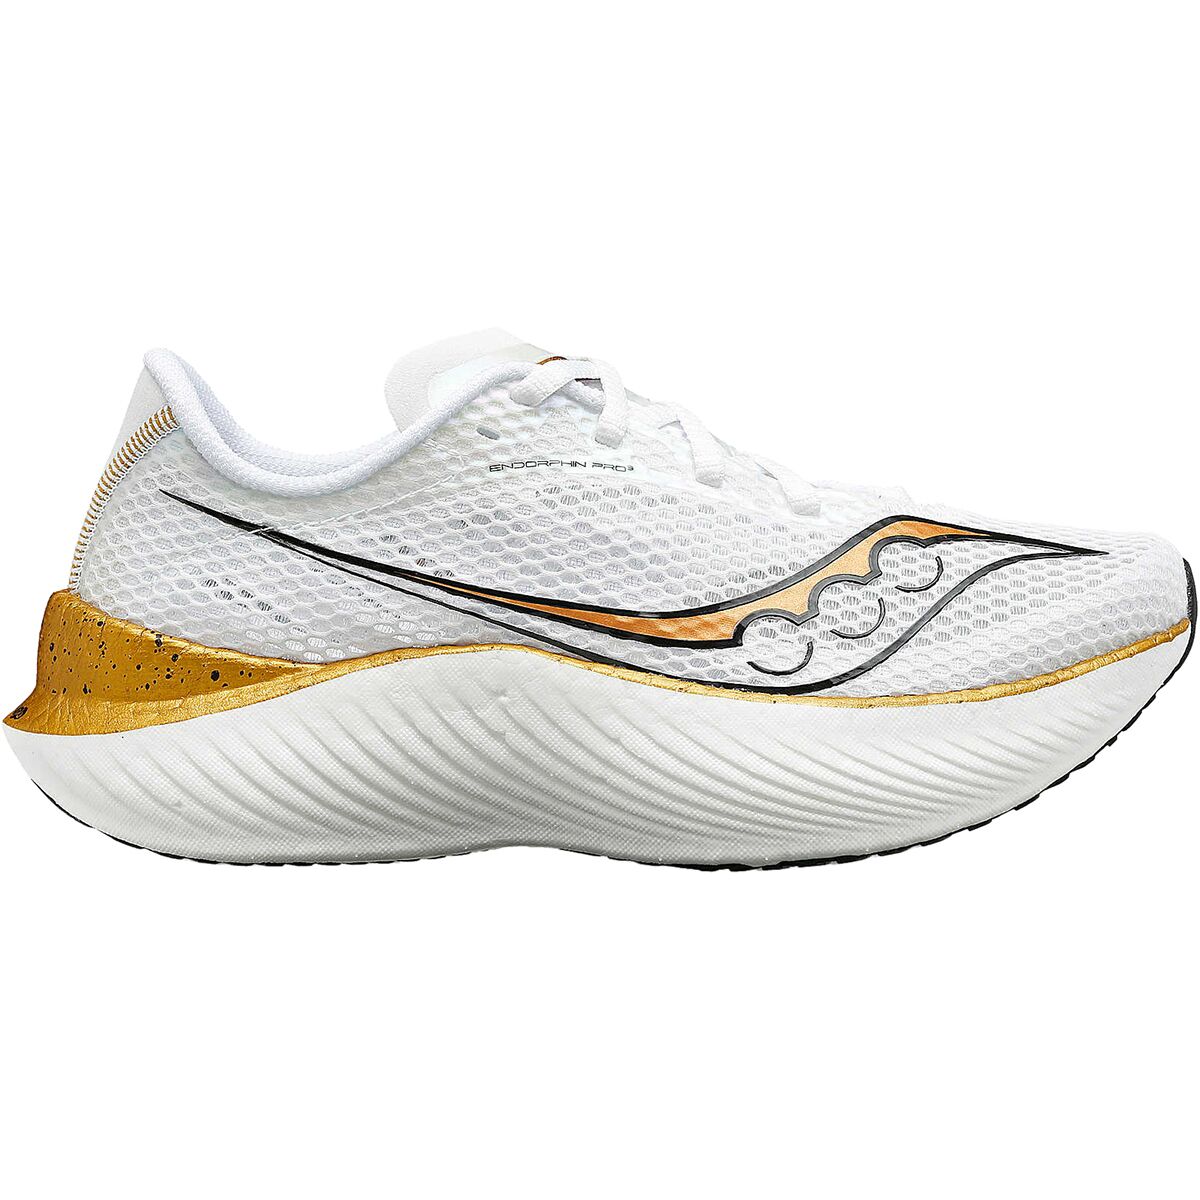 Endorphin Pro 3 Running Shoe - Women